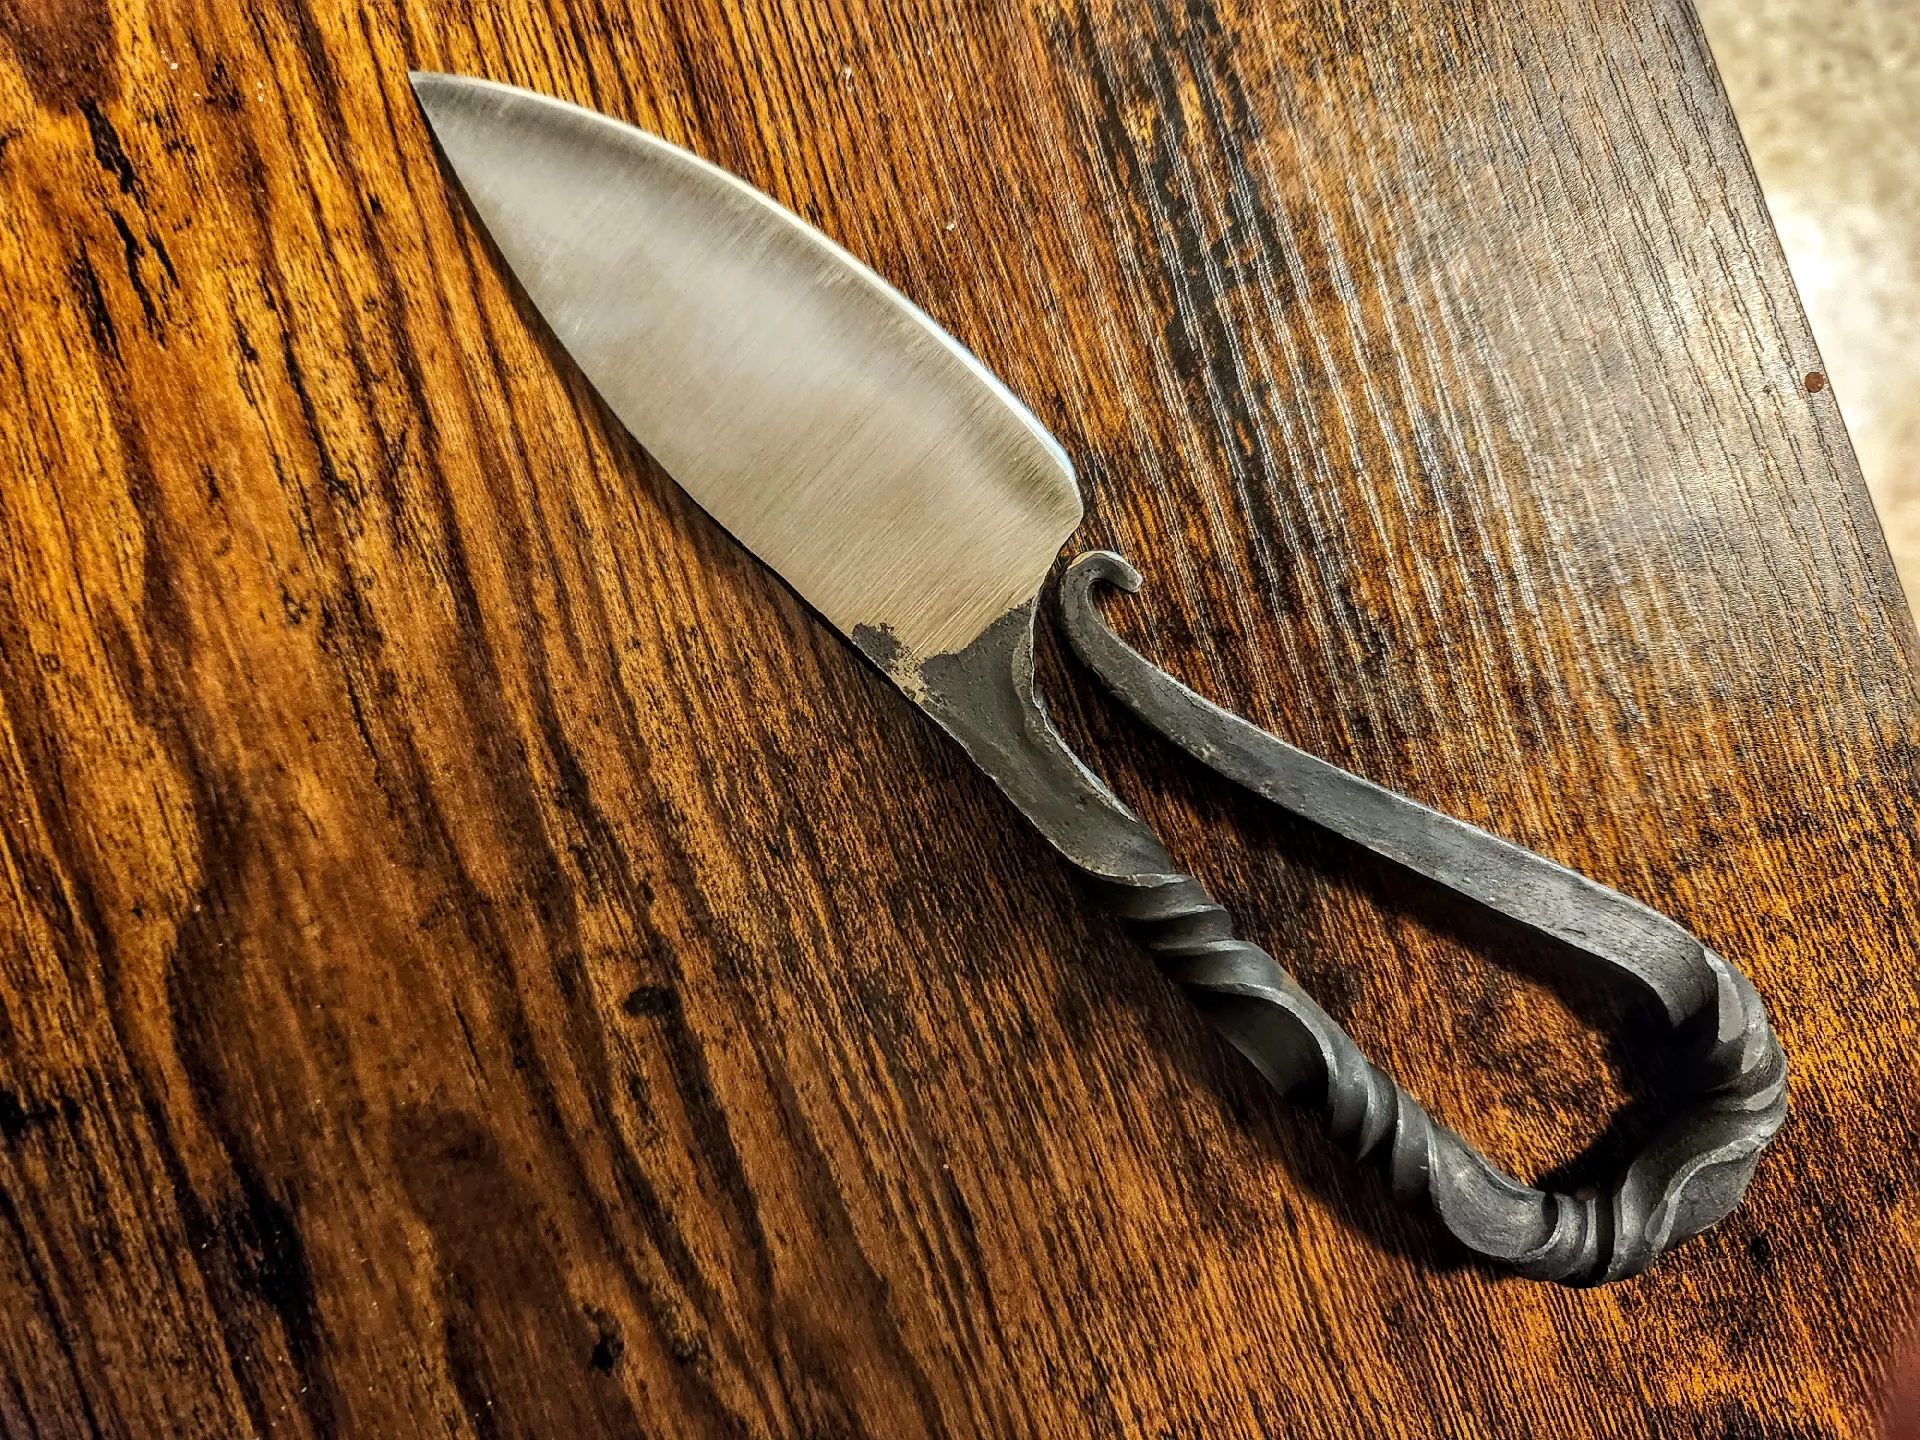 Celtic Knife, Handmade, Forge replica, Blacksmith, Pagan, Iron steel  product